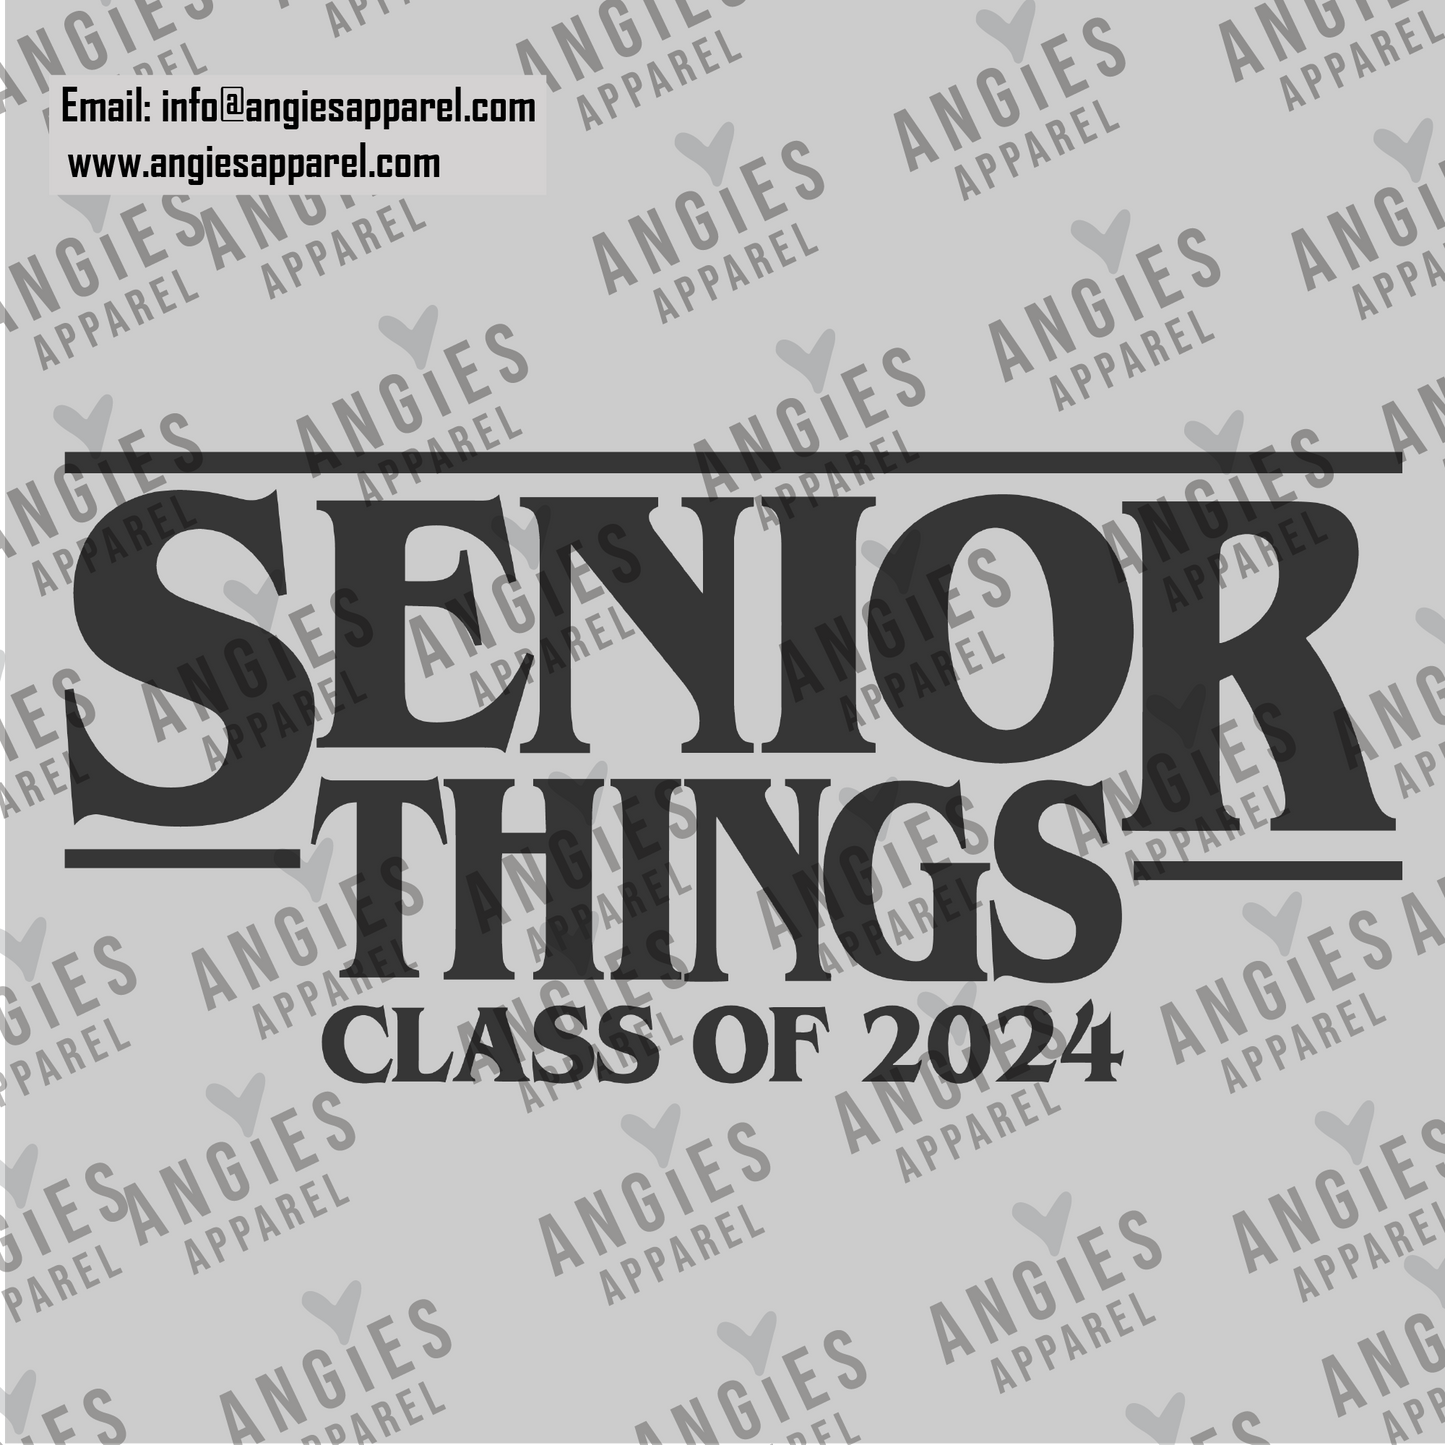 19.Senior Things Class of 2024